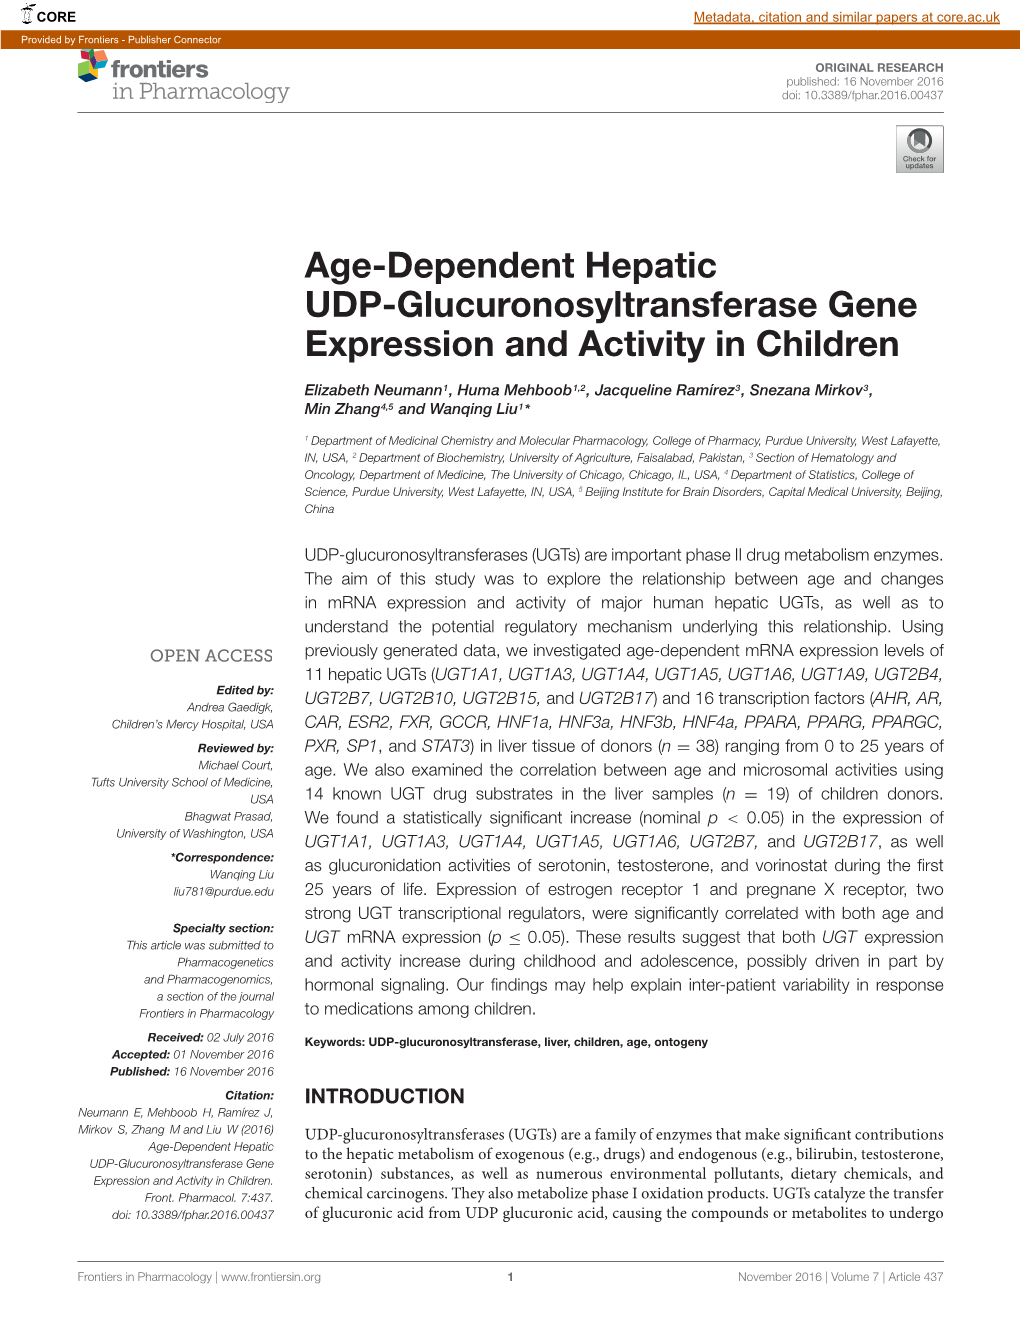 Age-Dependent Hepatic UDP-Glucuronosyltransferase Gene Expression and Activity in Children